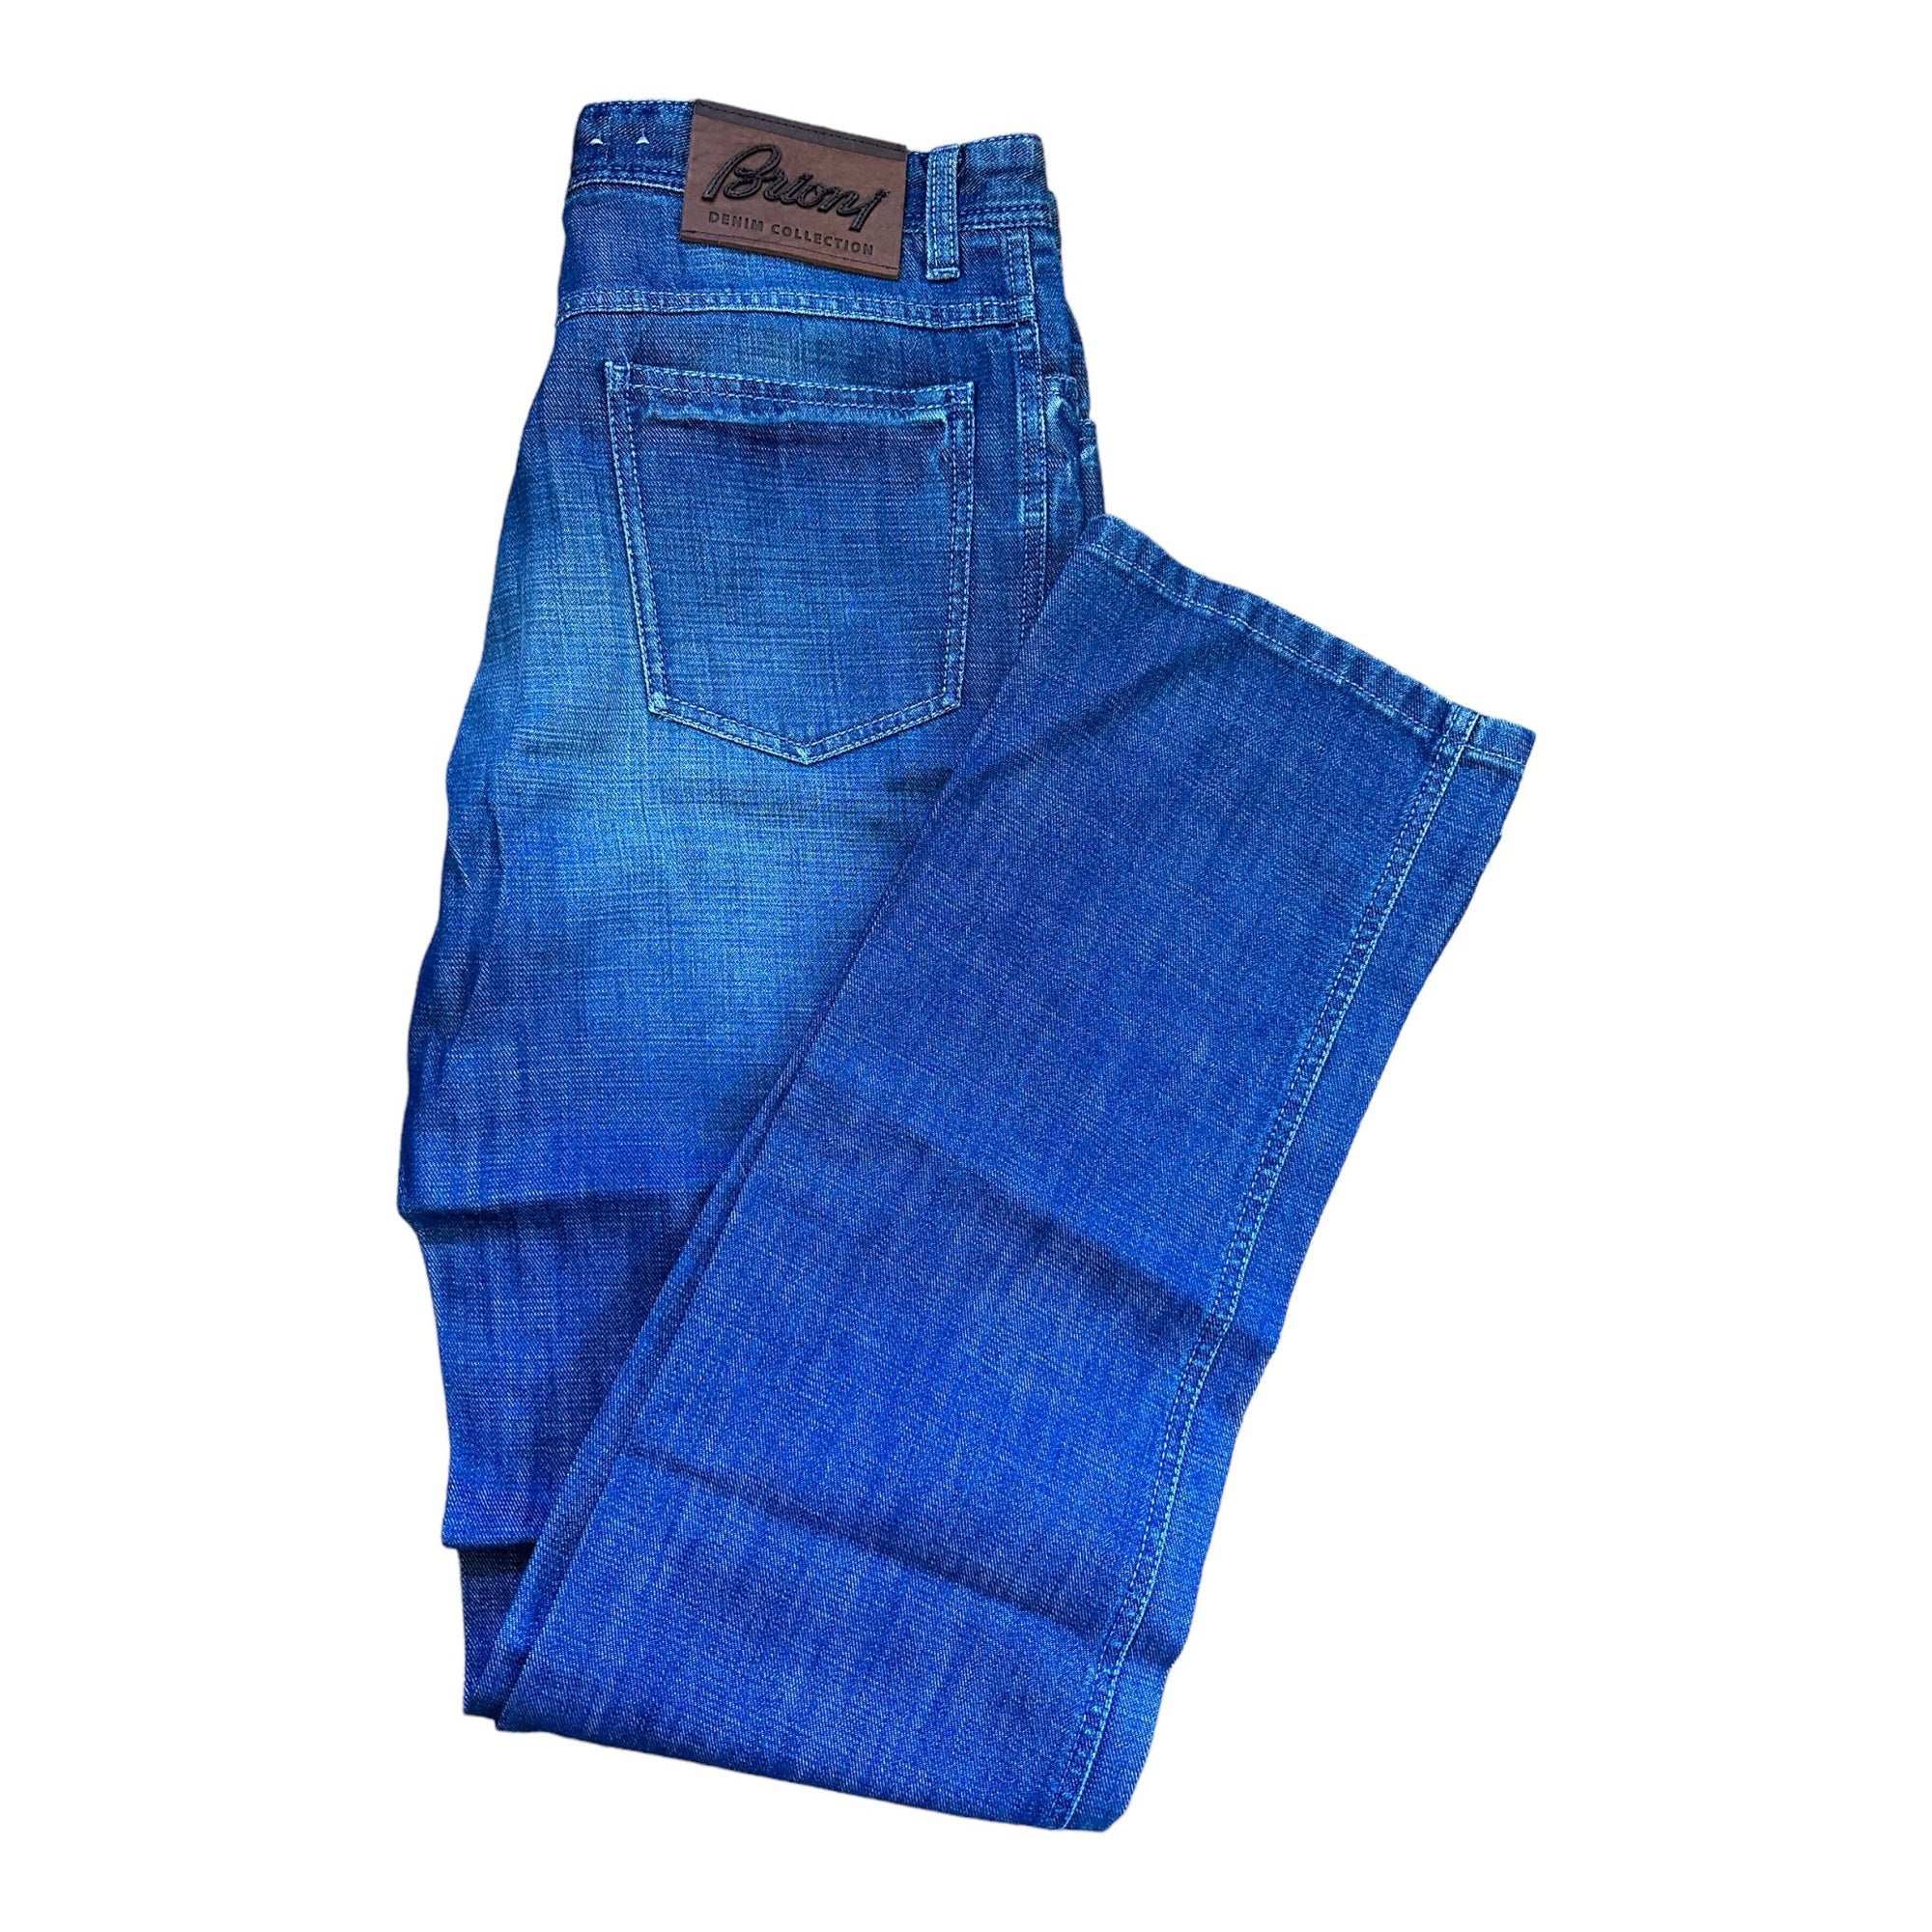 Brioni Jeans Stelvio - 24/7 Clothing